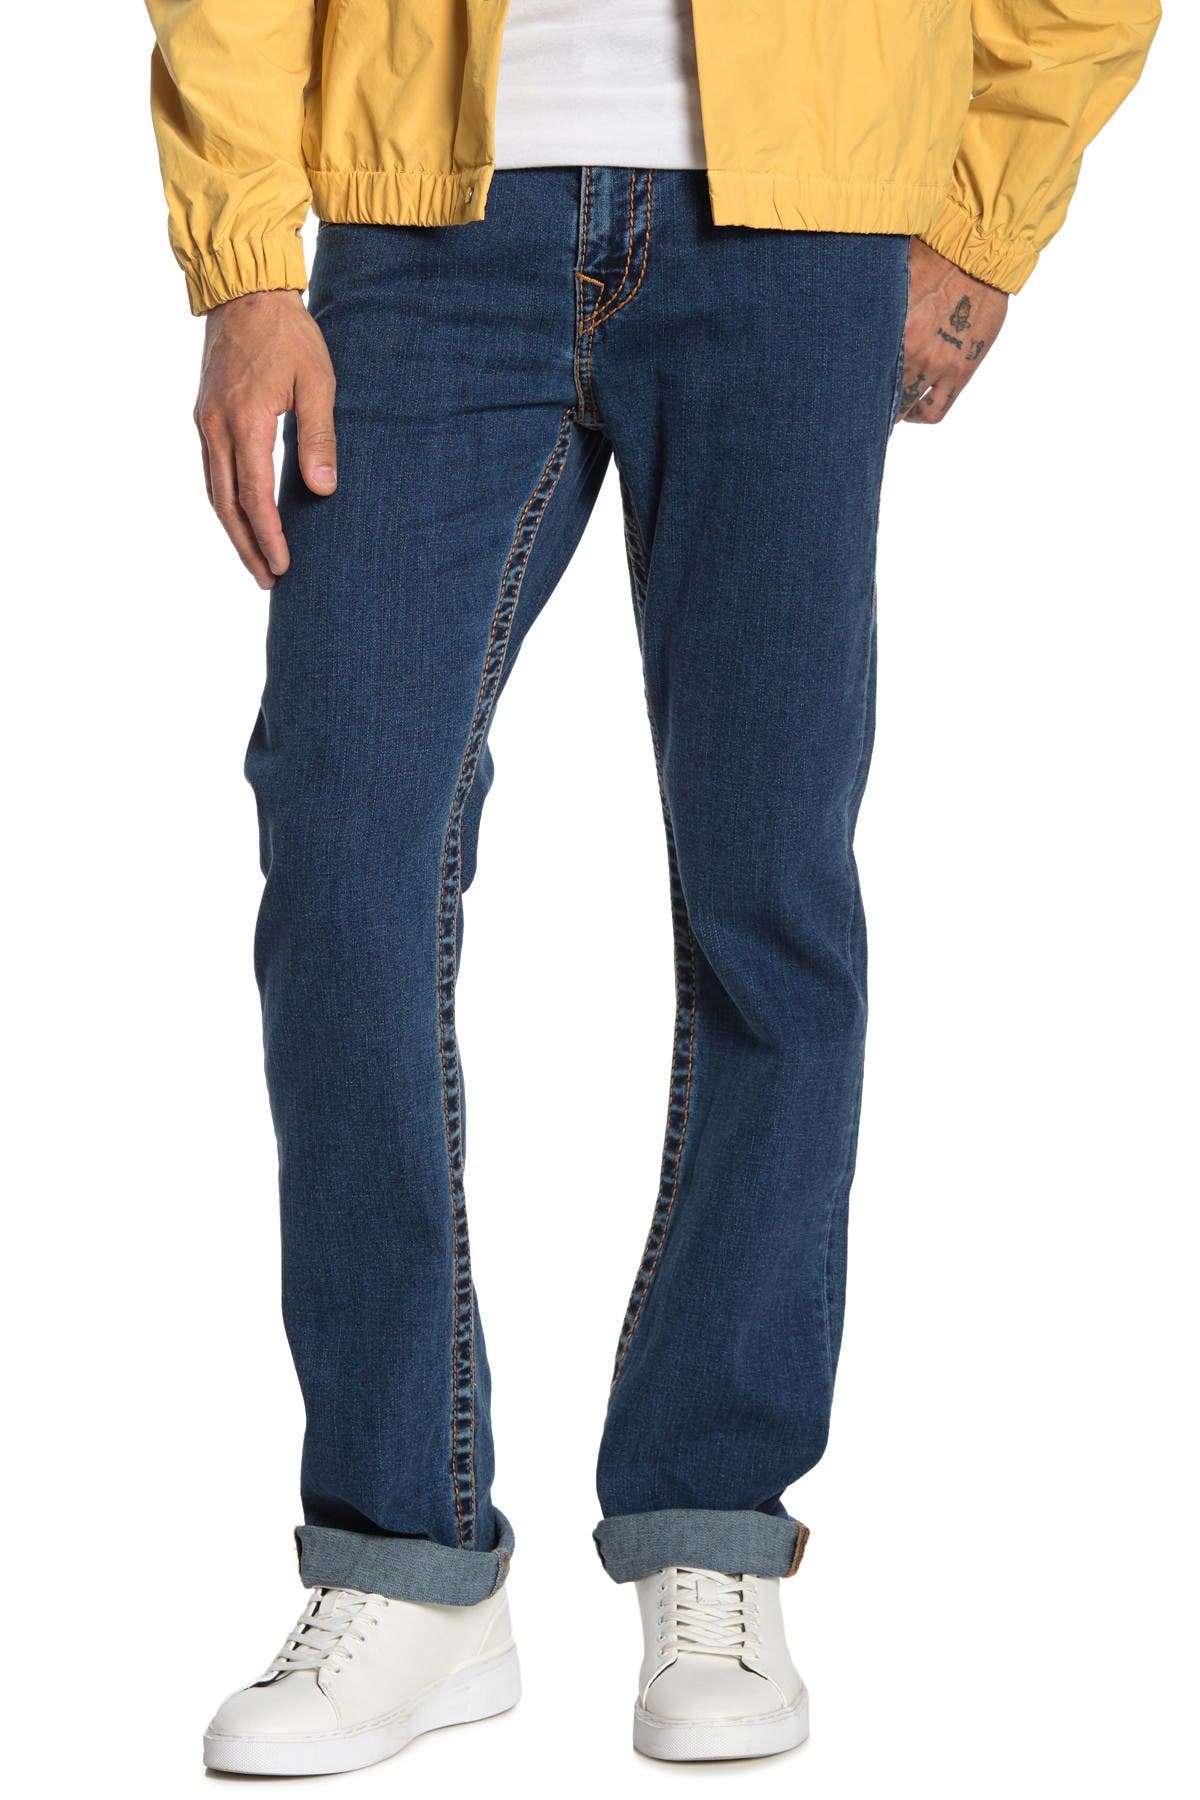 true religion mens jeans nordstrom rack